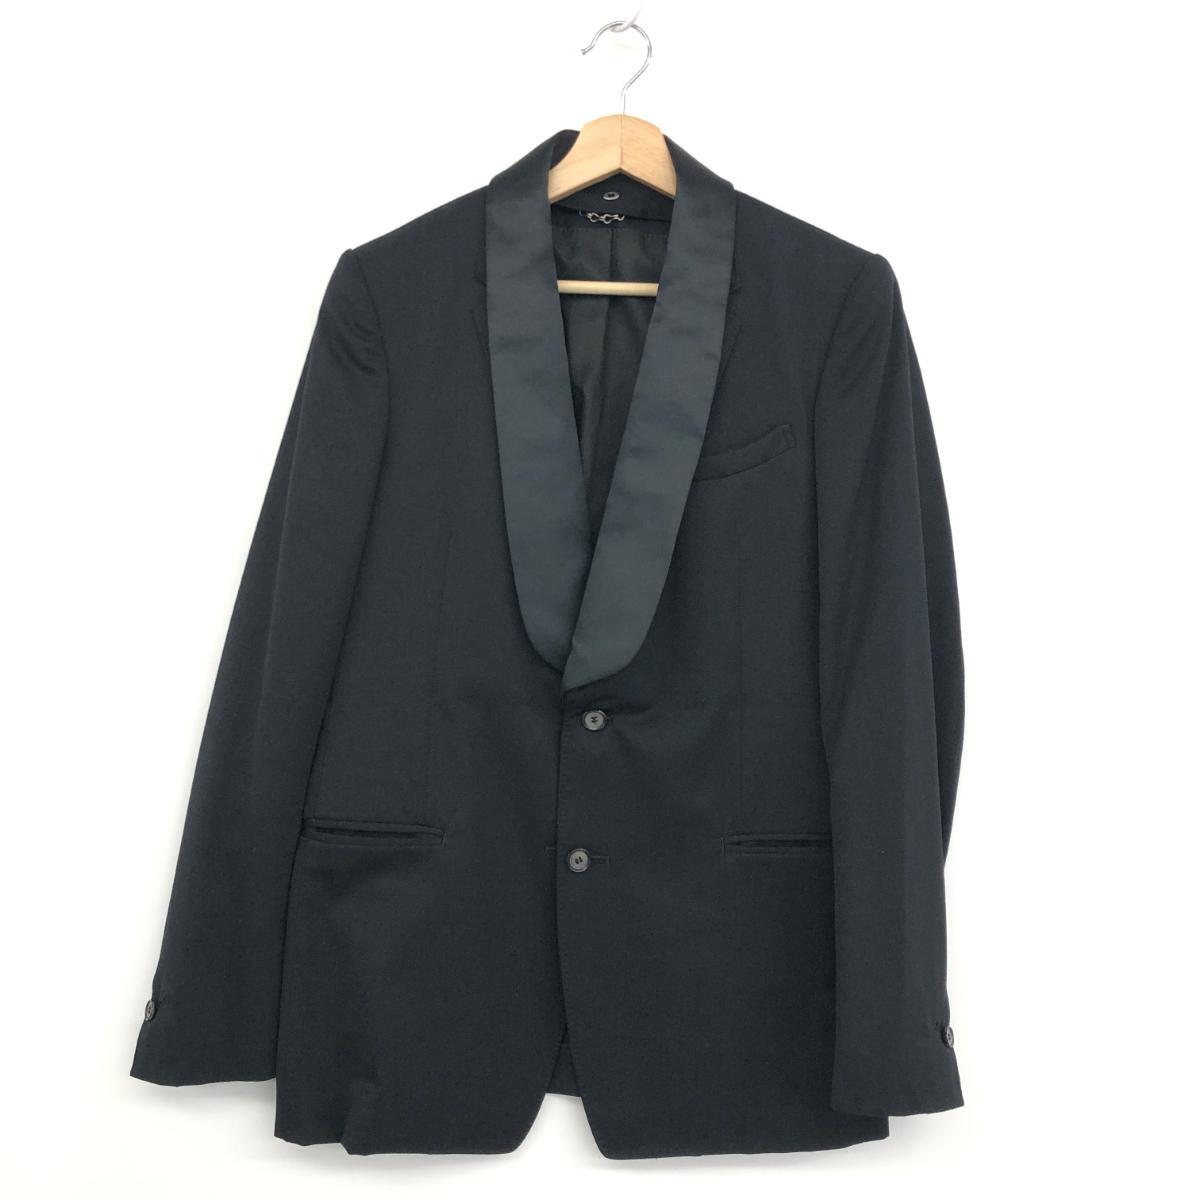 *MIHARA YASUHIRO Mihara Yasuhiro 2WAY setup 46*11411112 black men's top and bottom set tuxedo jacket 